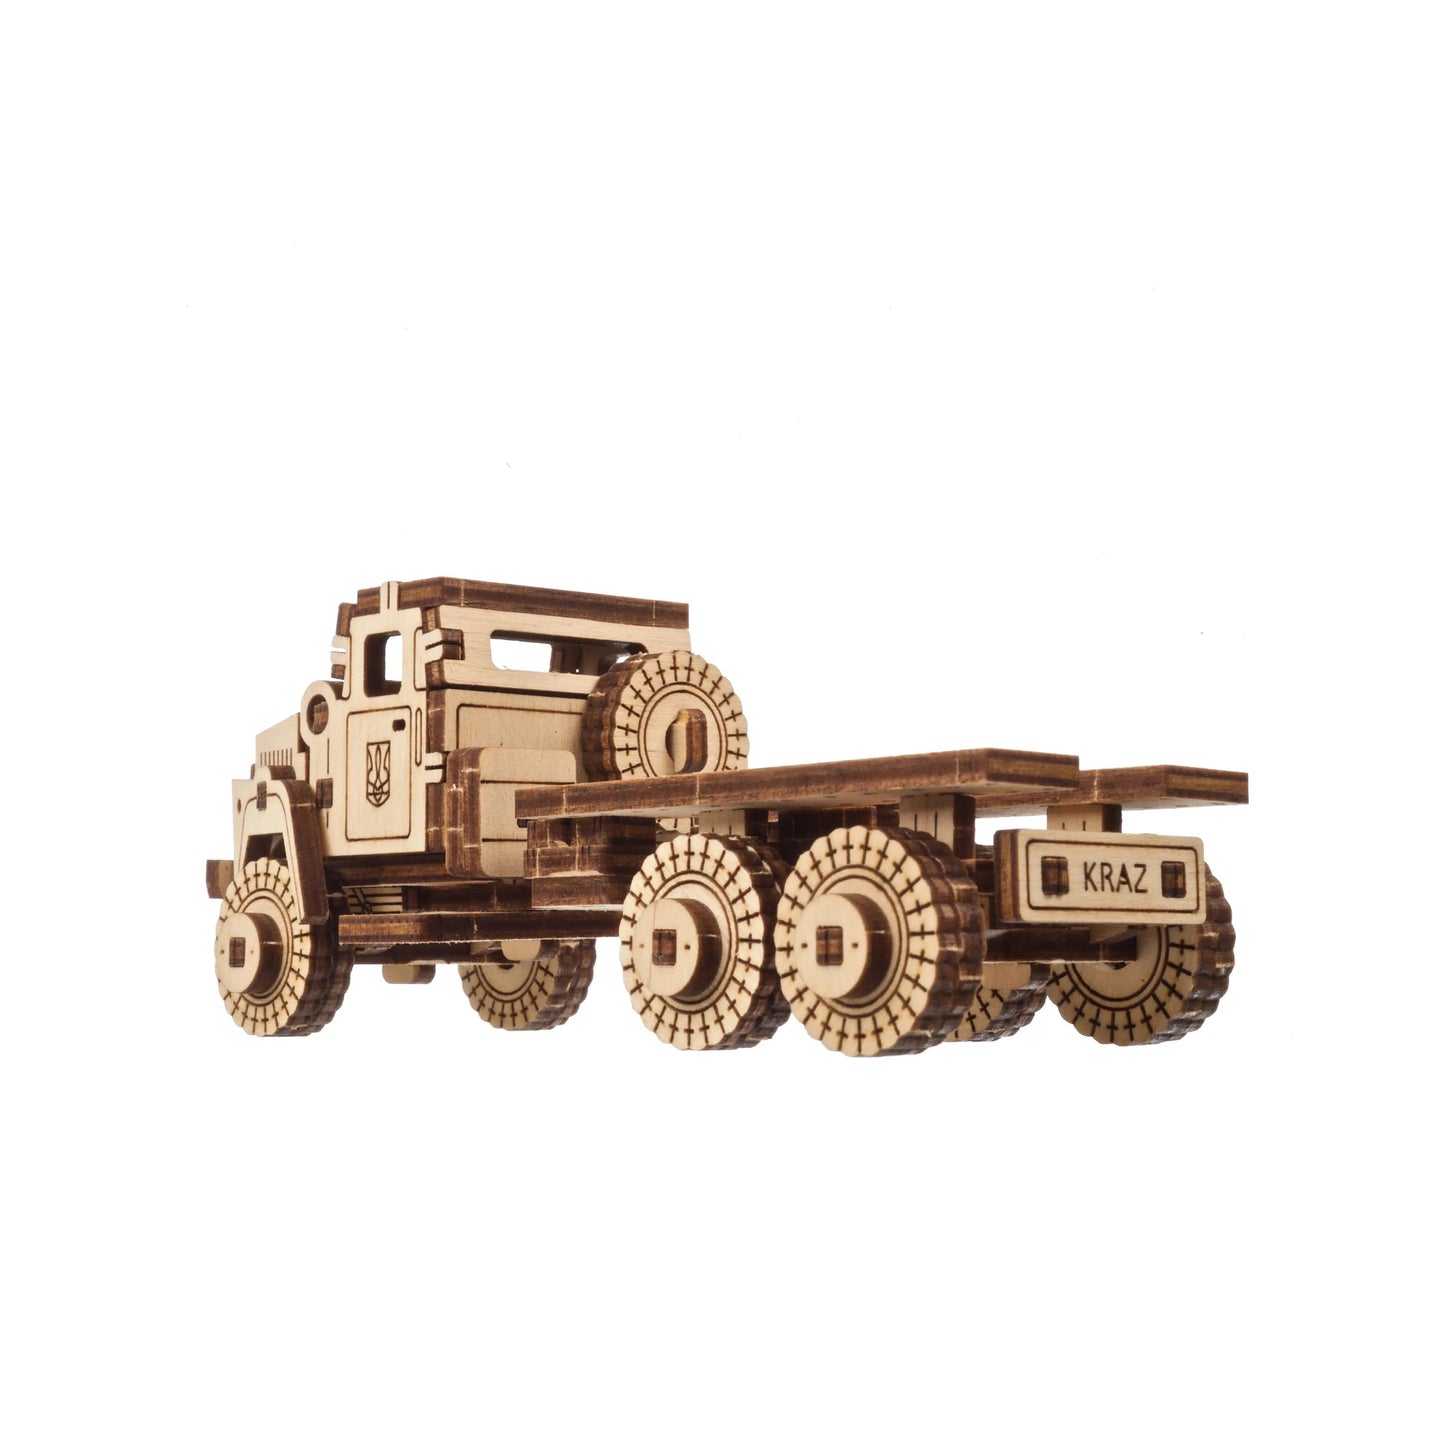 Military Truck 3D Wood Model Kit UGEARS